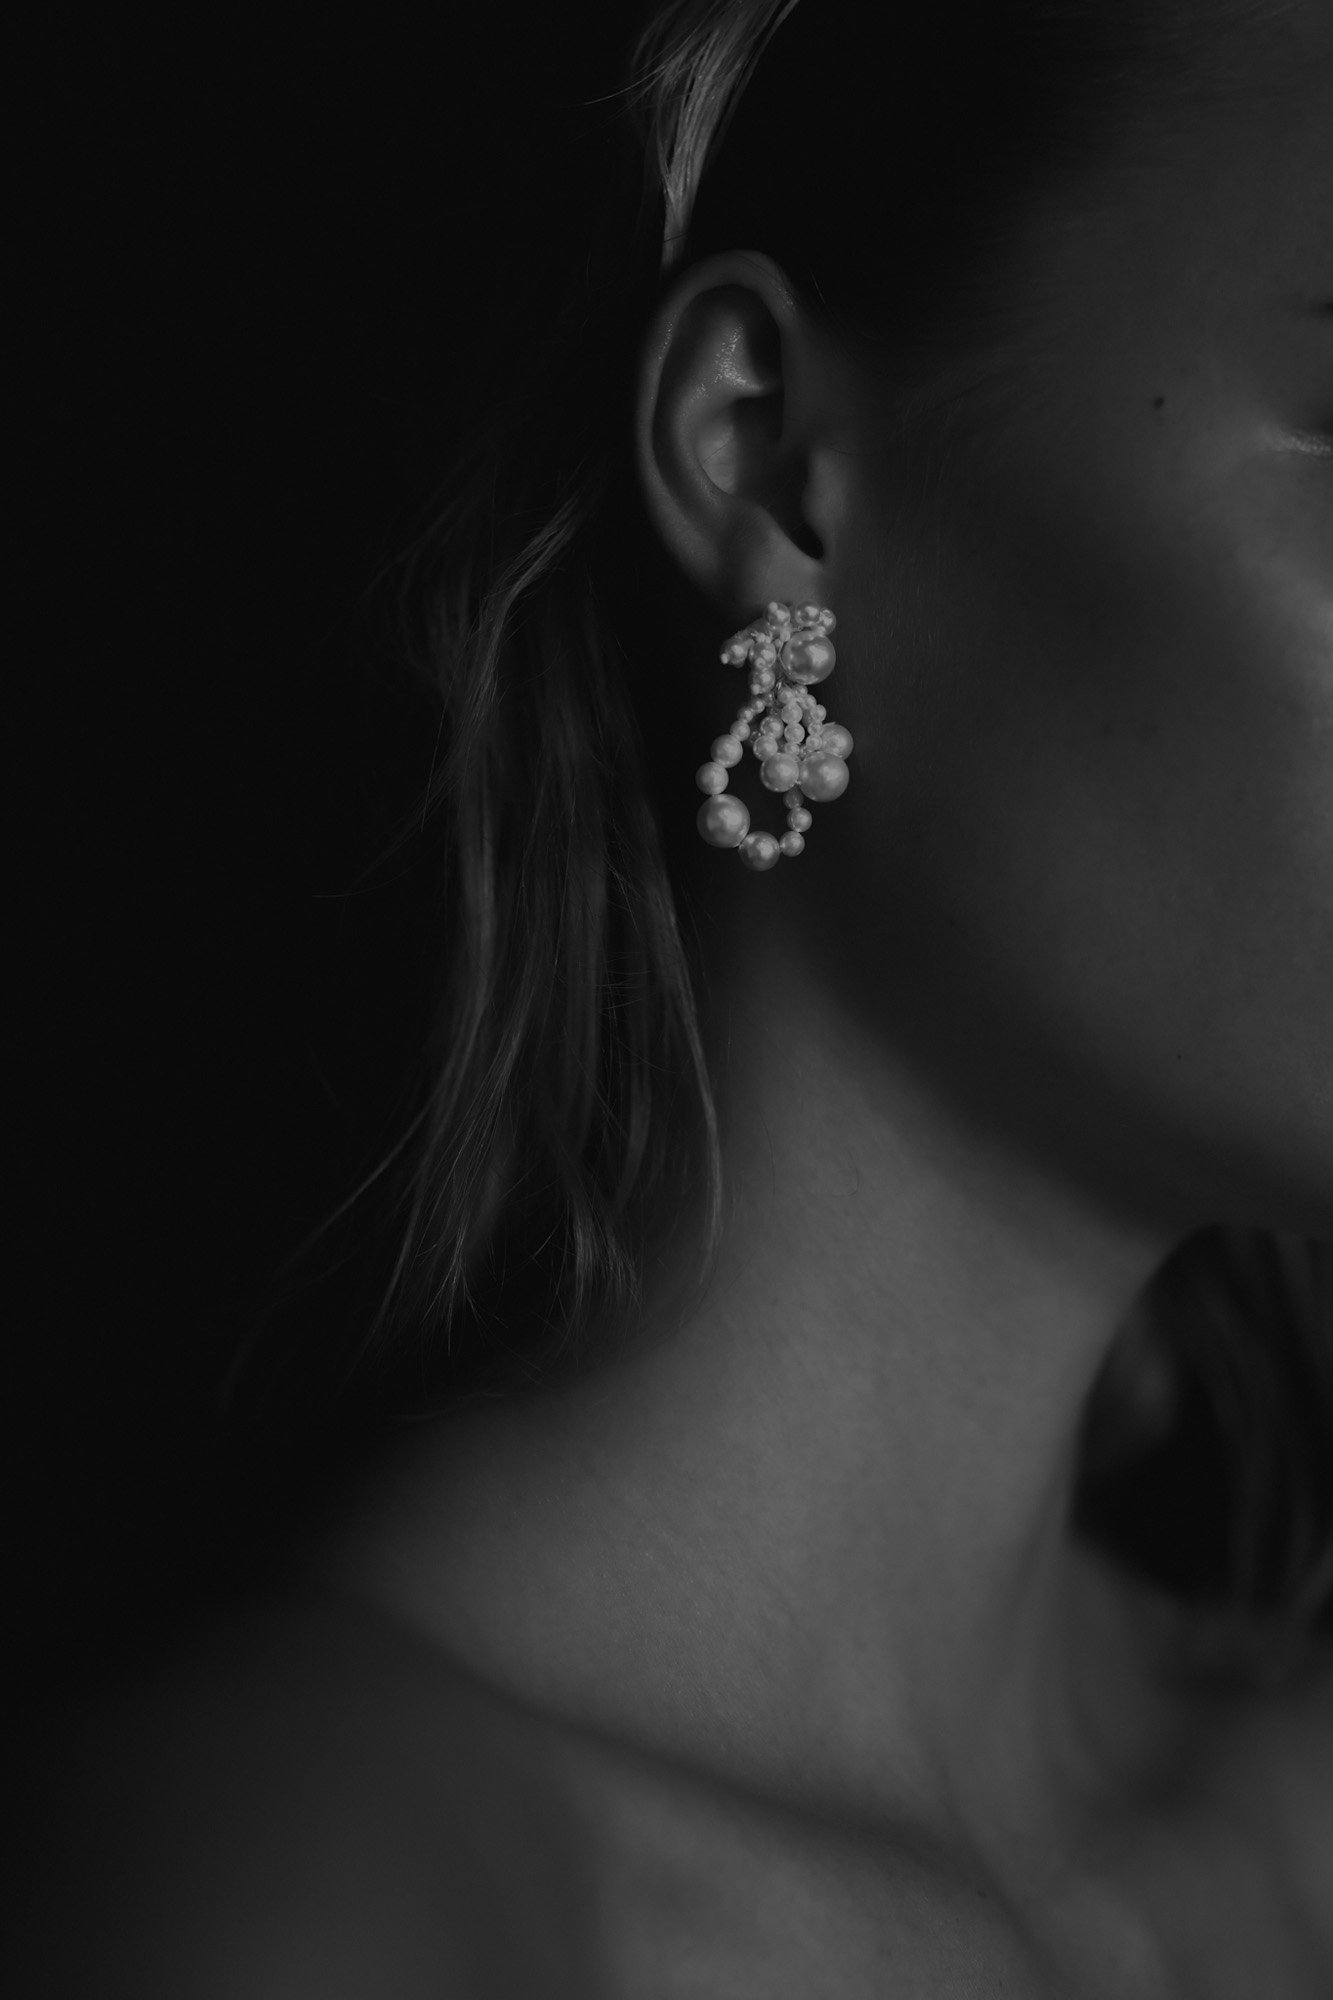 Devin Drop Earrings by A.B. ELLIE Bridal Accessories — A.B. ELLIE